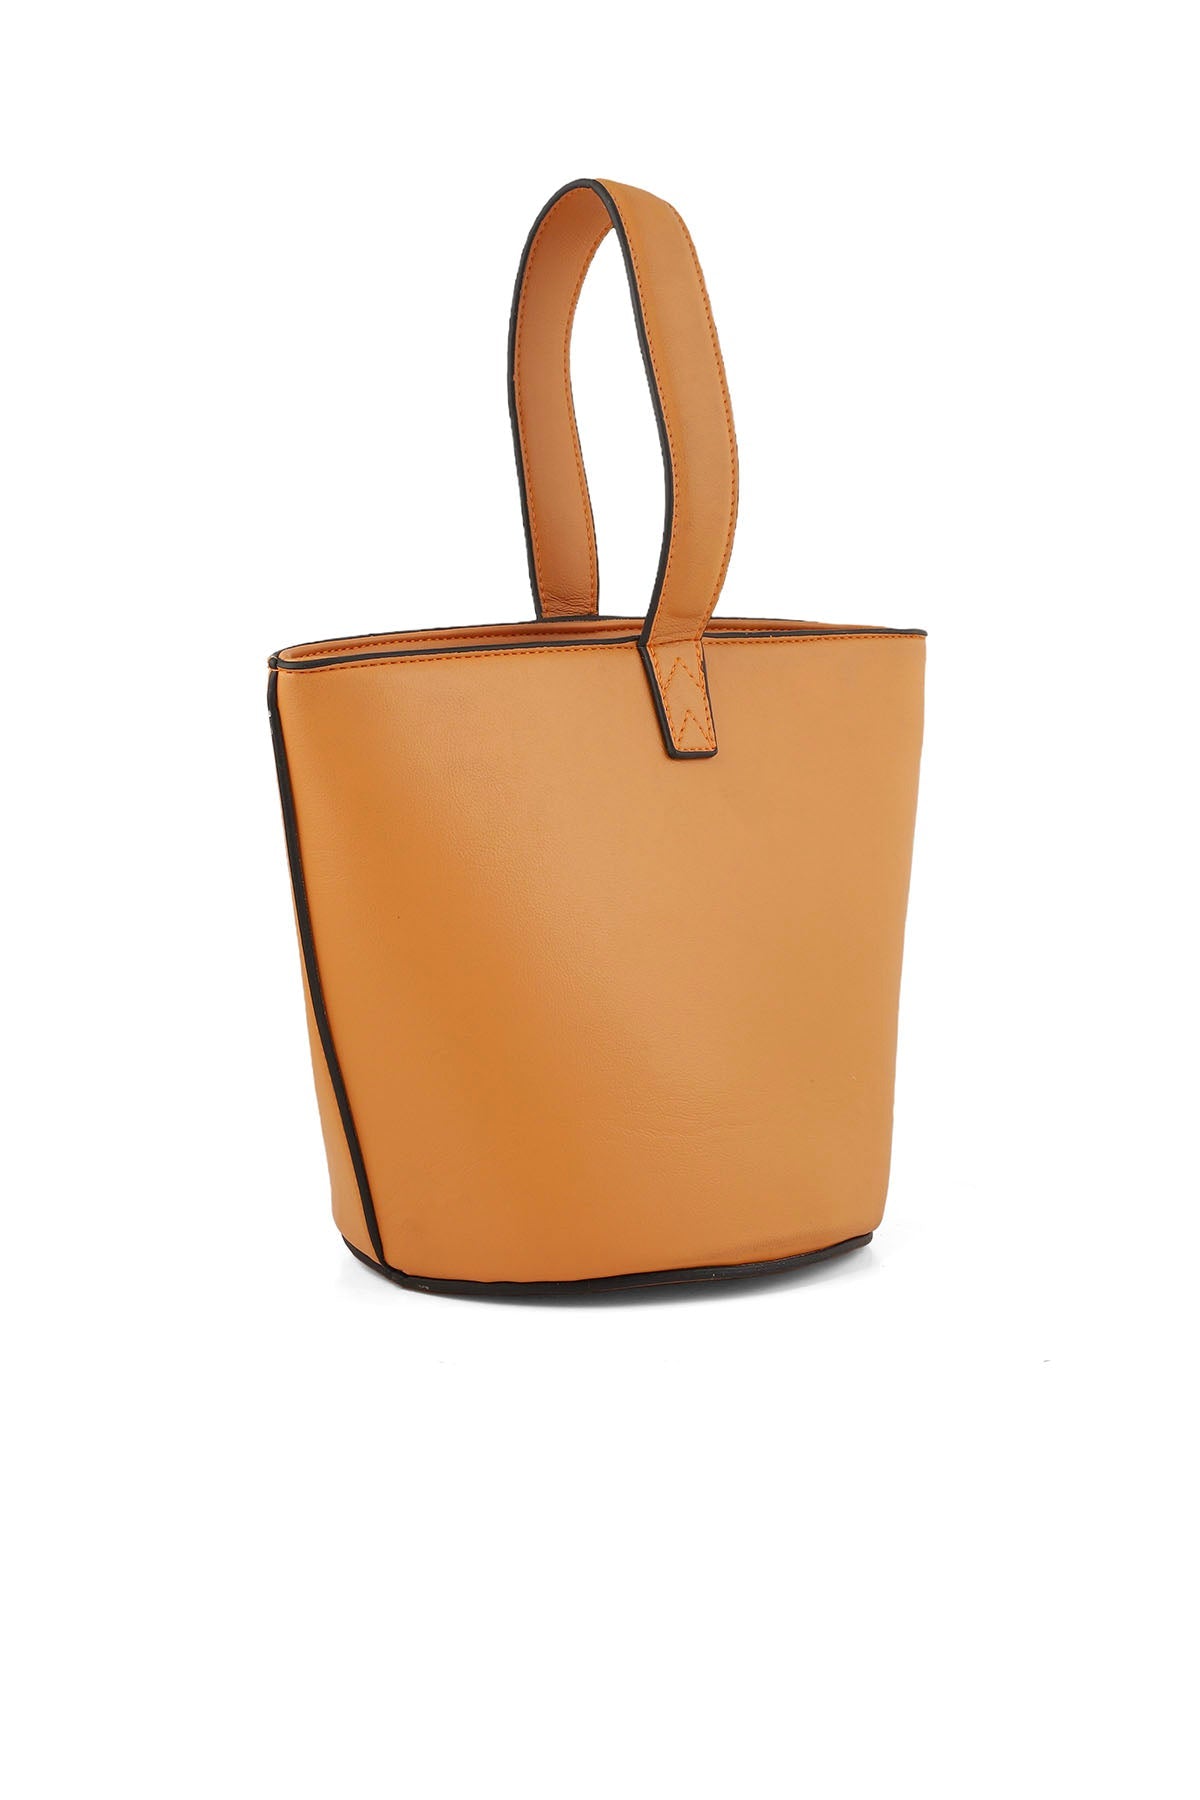 Bucket Hand Bags B21453-Orange